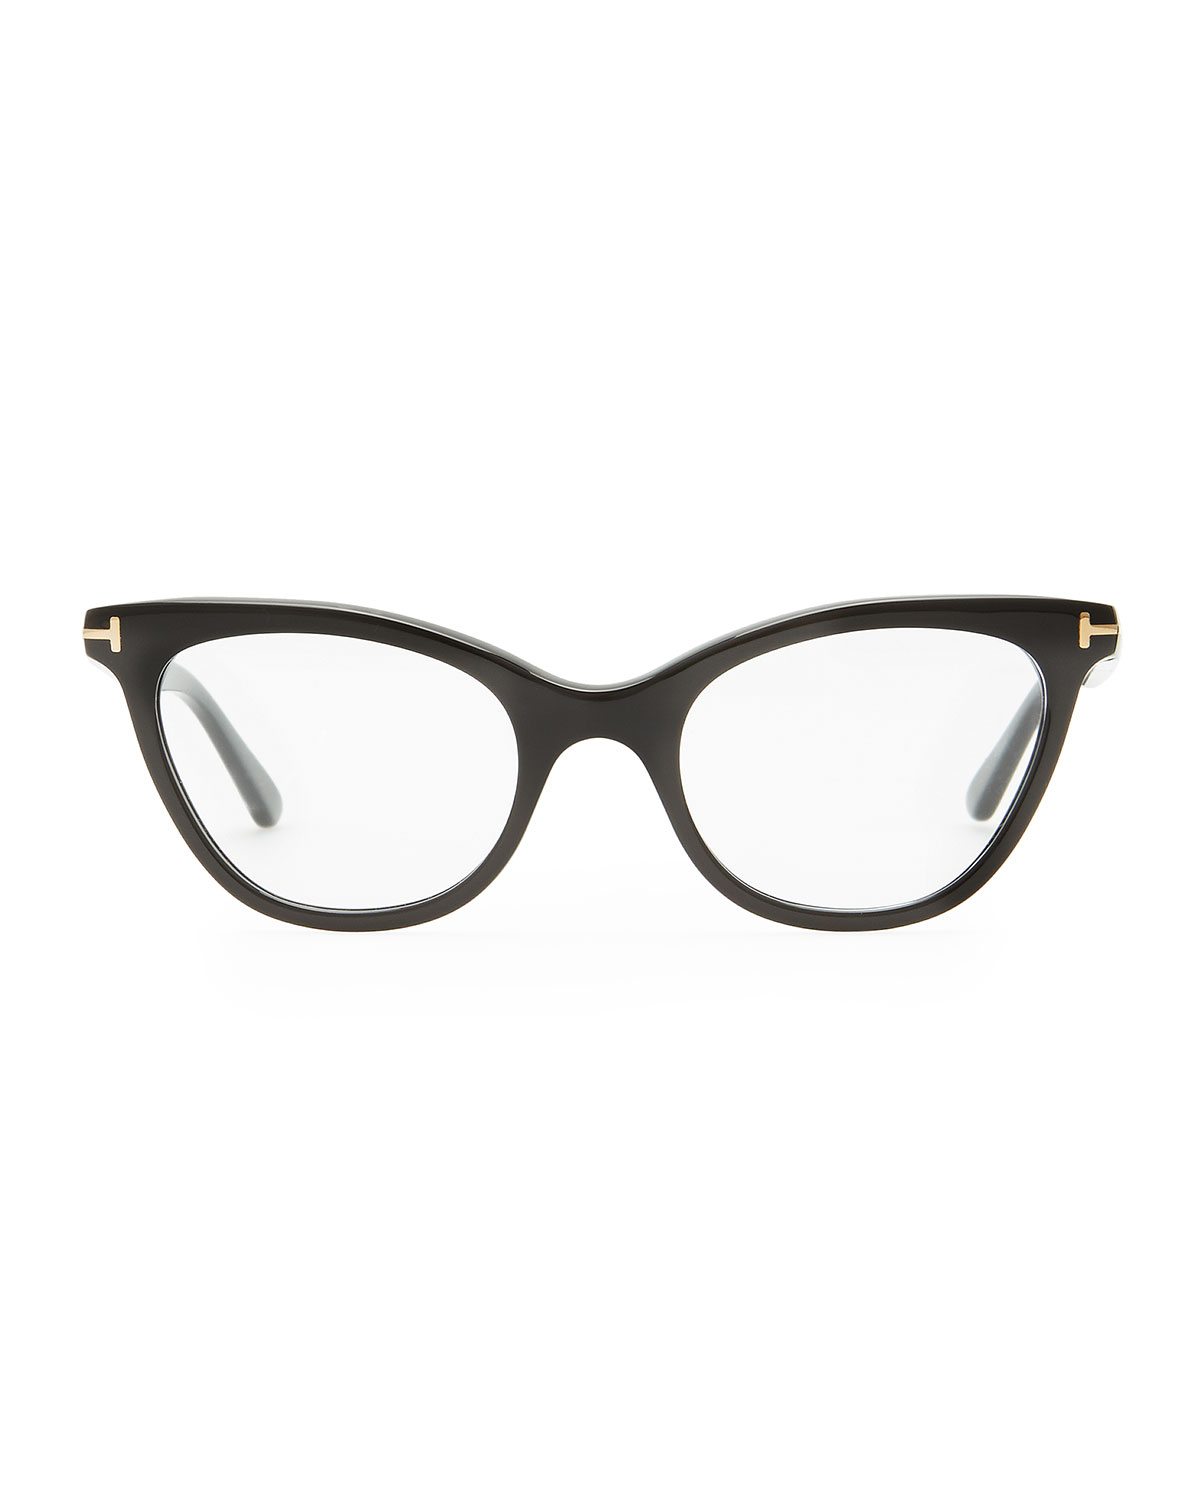 Tom Ford Womens Slight Cateye Fashion Glasses Shiny Black In Black Shn Blk Rse Gld Lyst